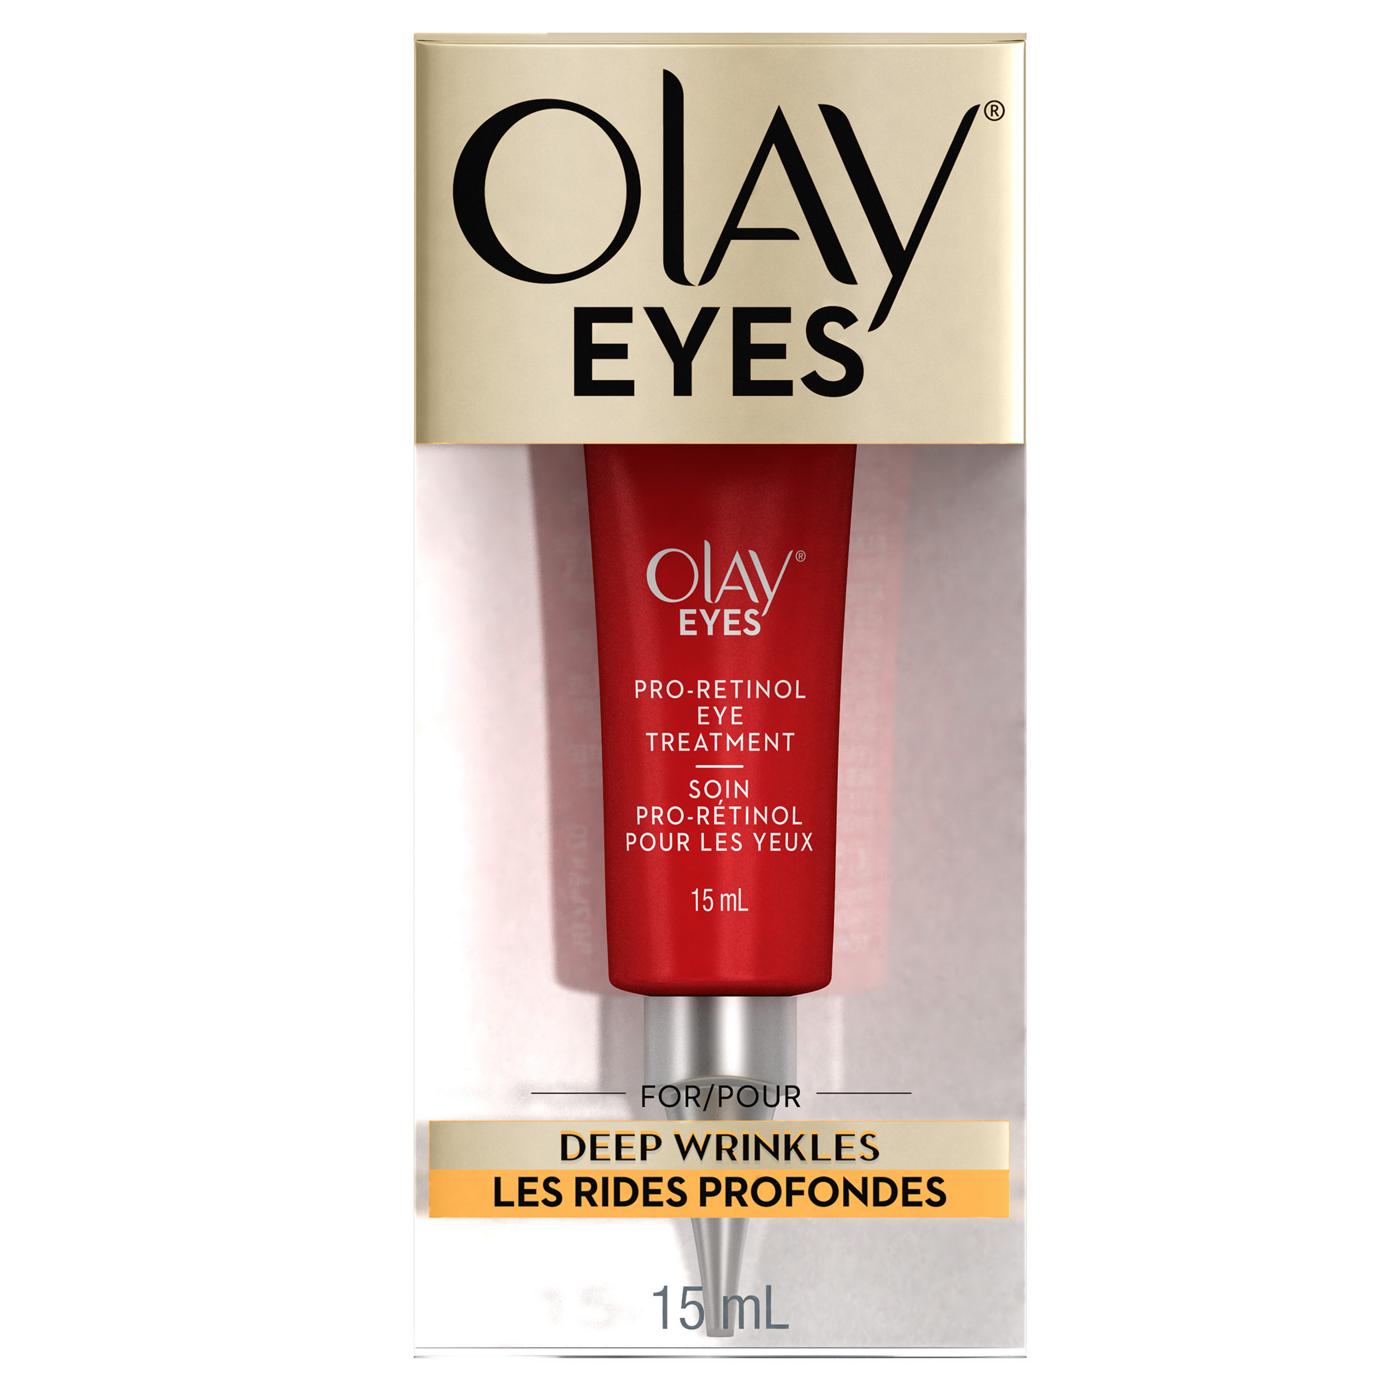 Olay Olay Eyes Pro Retinol Eye Cream Treatment for Wrinkles; image 1 of 2